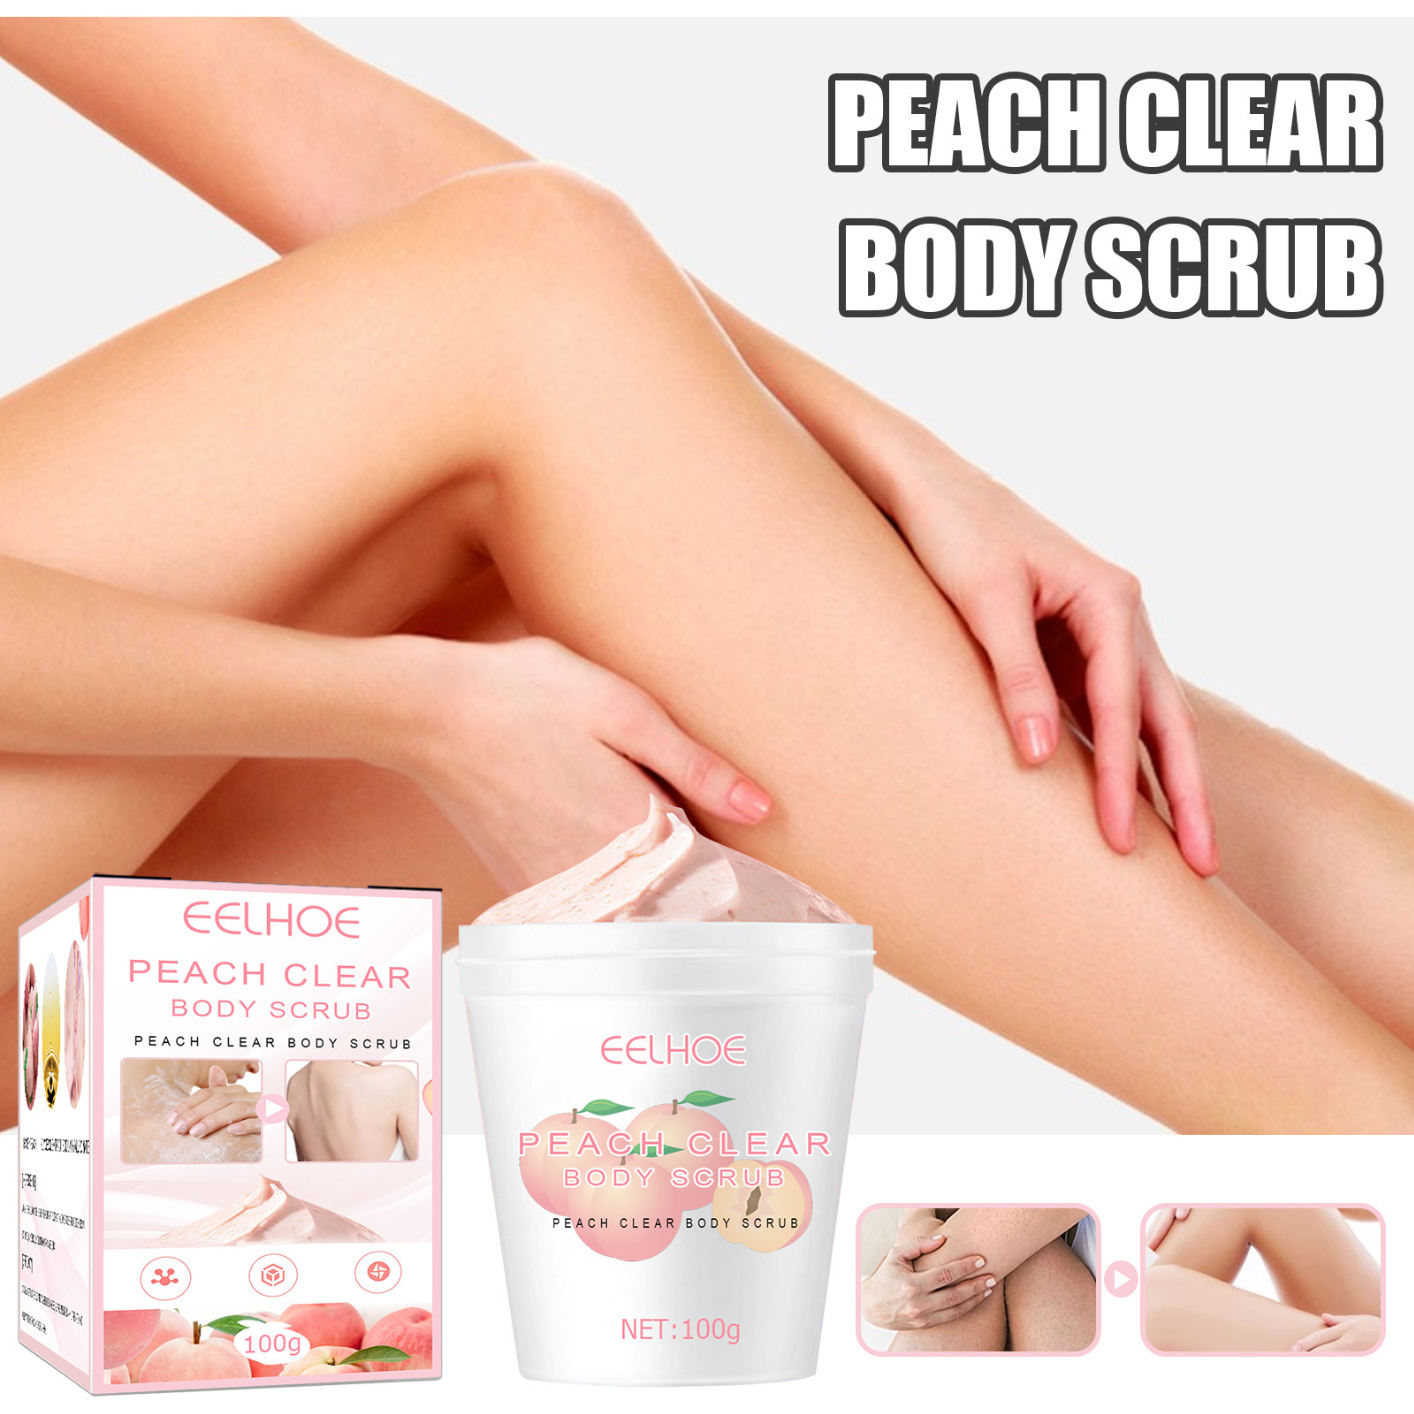 Peach Body Scrub Exfoliator - Exfoliating Salt Scrub for Cellulite - Deep Cleansing for Acne, Scars, Wrinkles - Moisturizes Skin